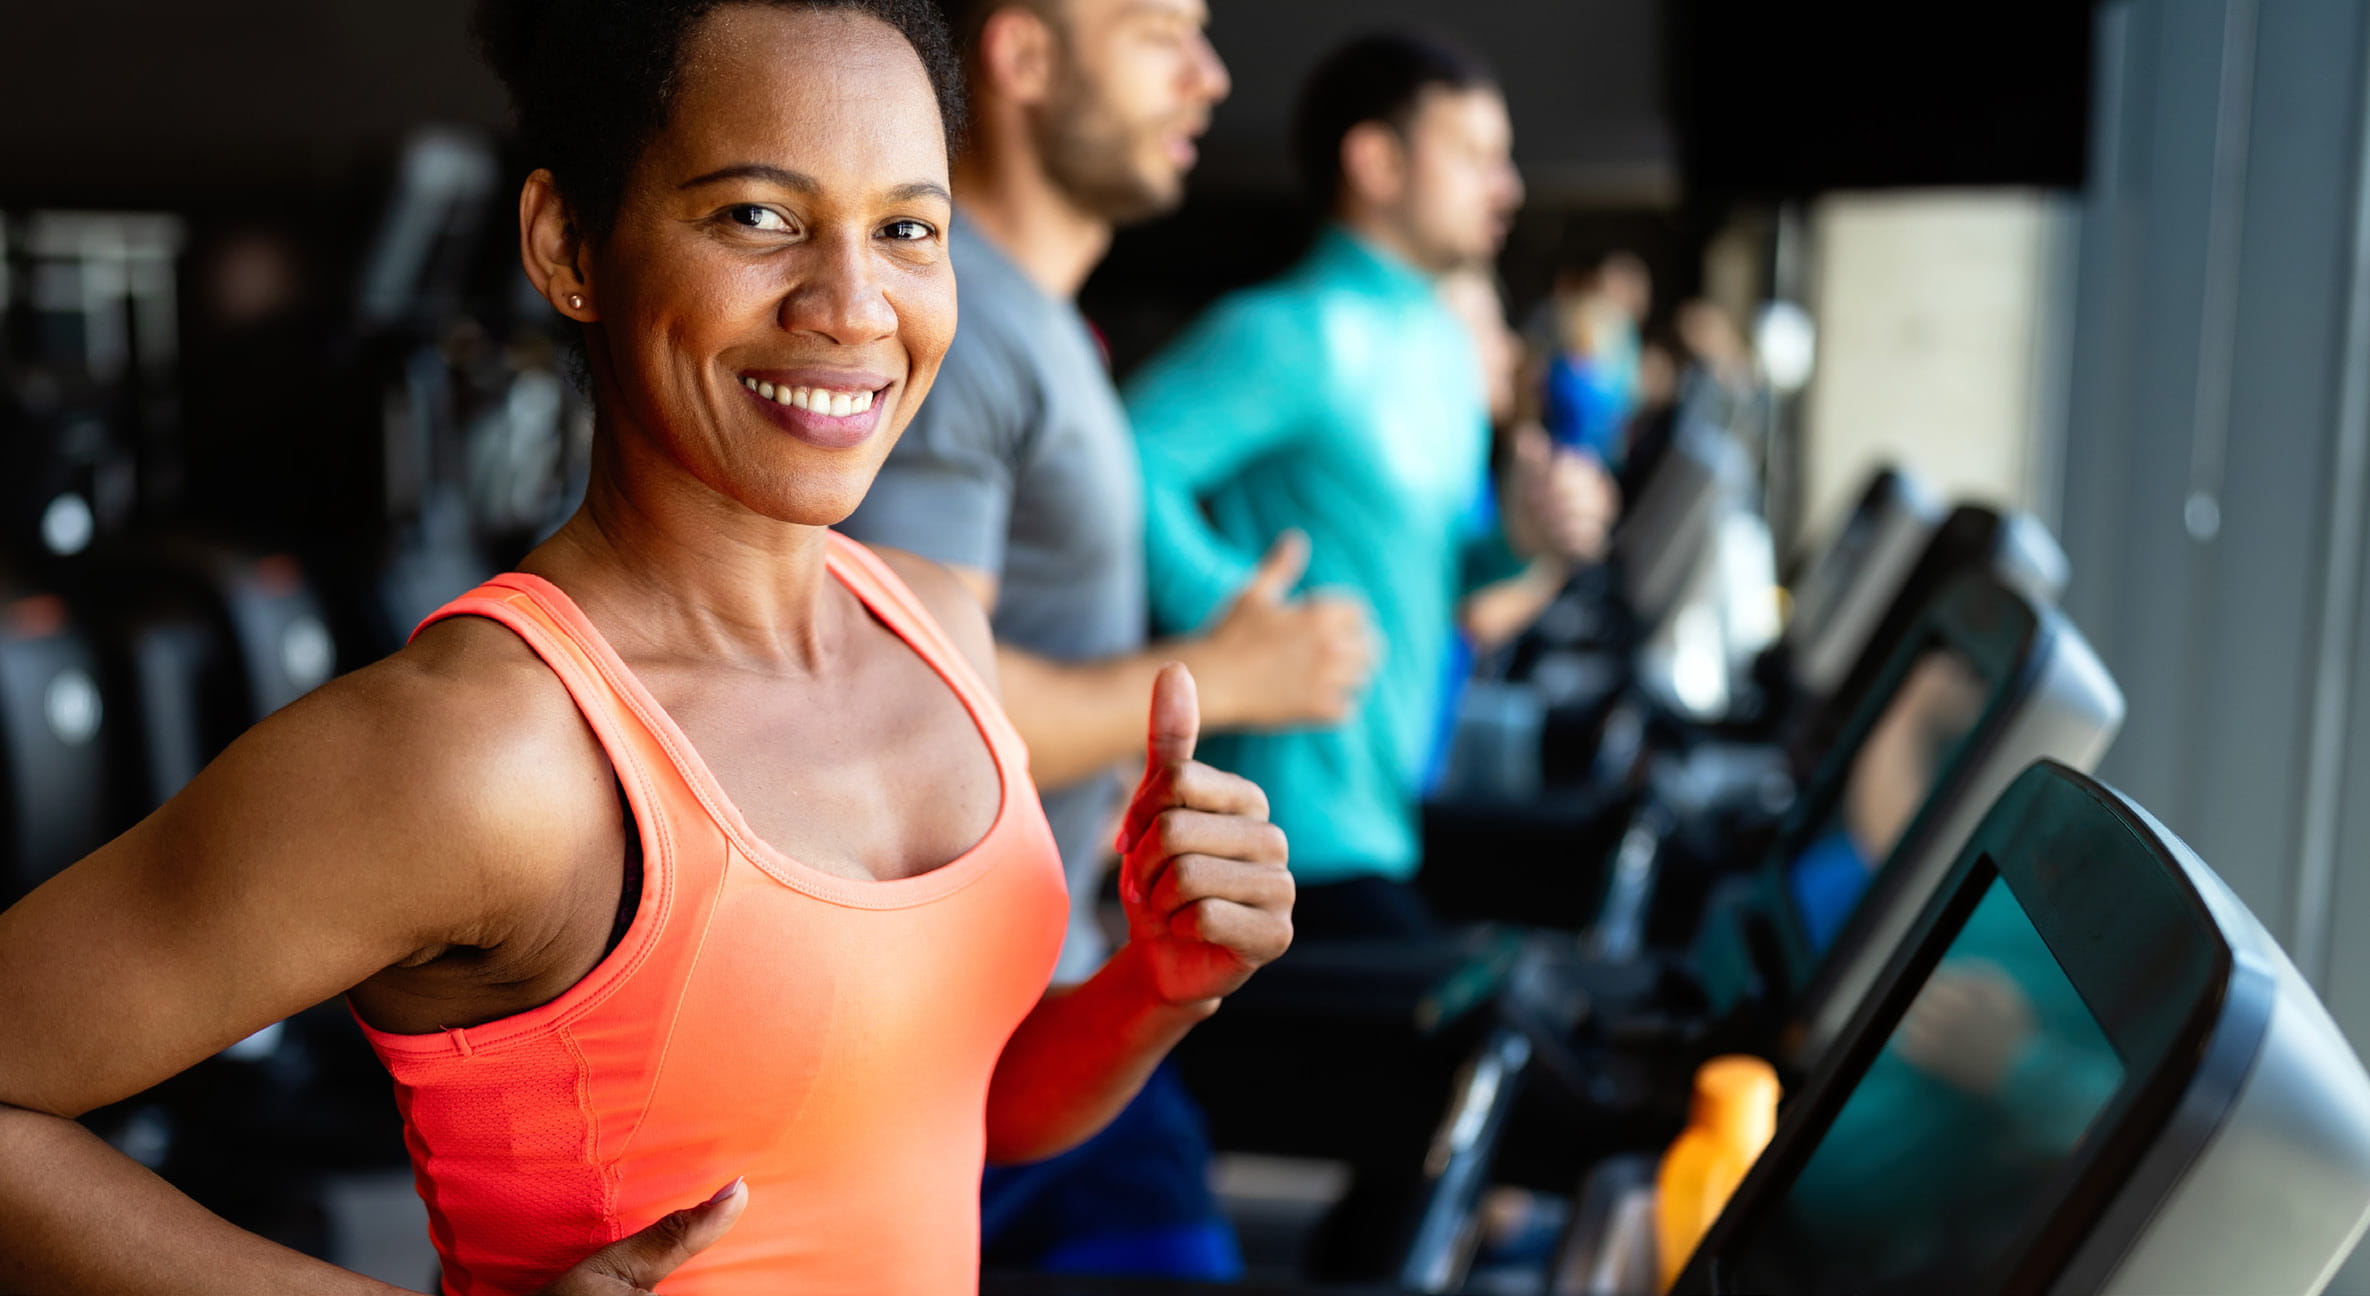 African American Woman in an orange shirt running on a treadmill